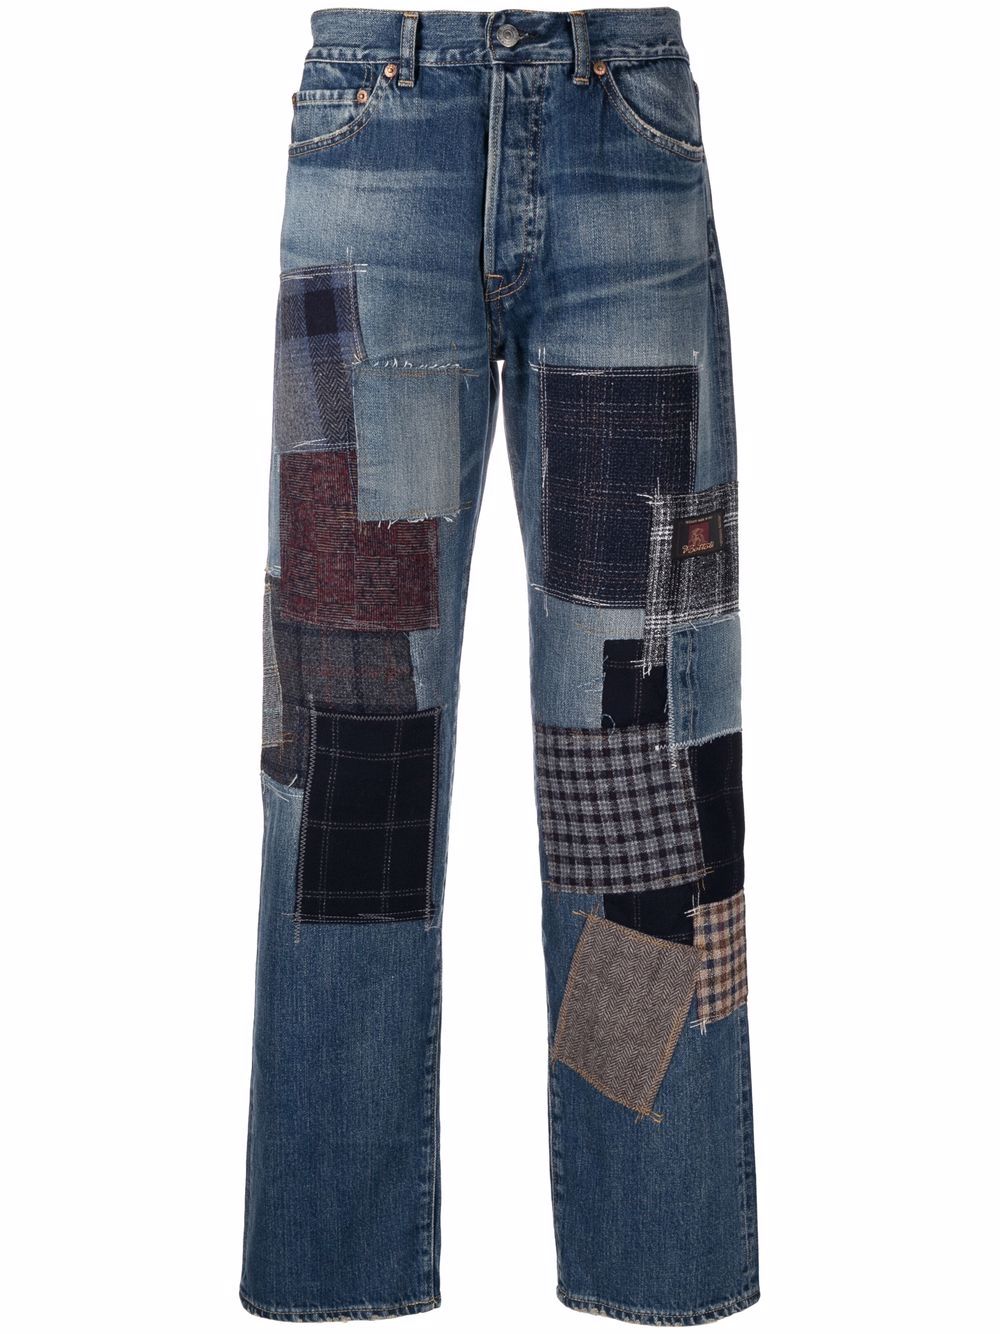 Junya Watanabe Man X Levi's Patchwork-Jeans mit geradem Bein - Blau von Junya Watanabe Man X Levi's